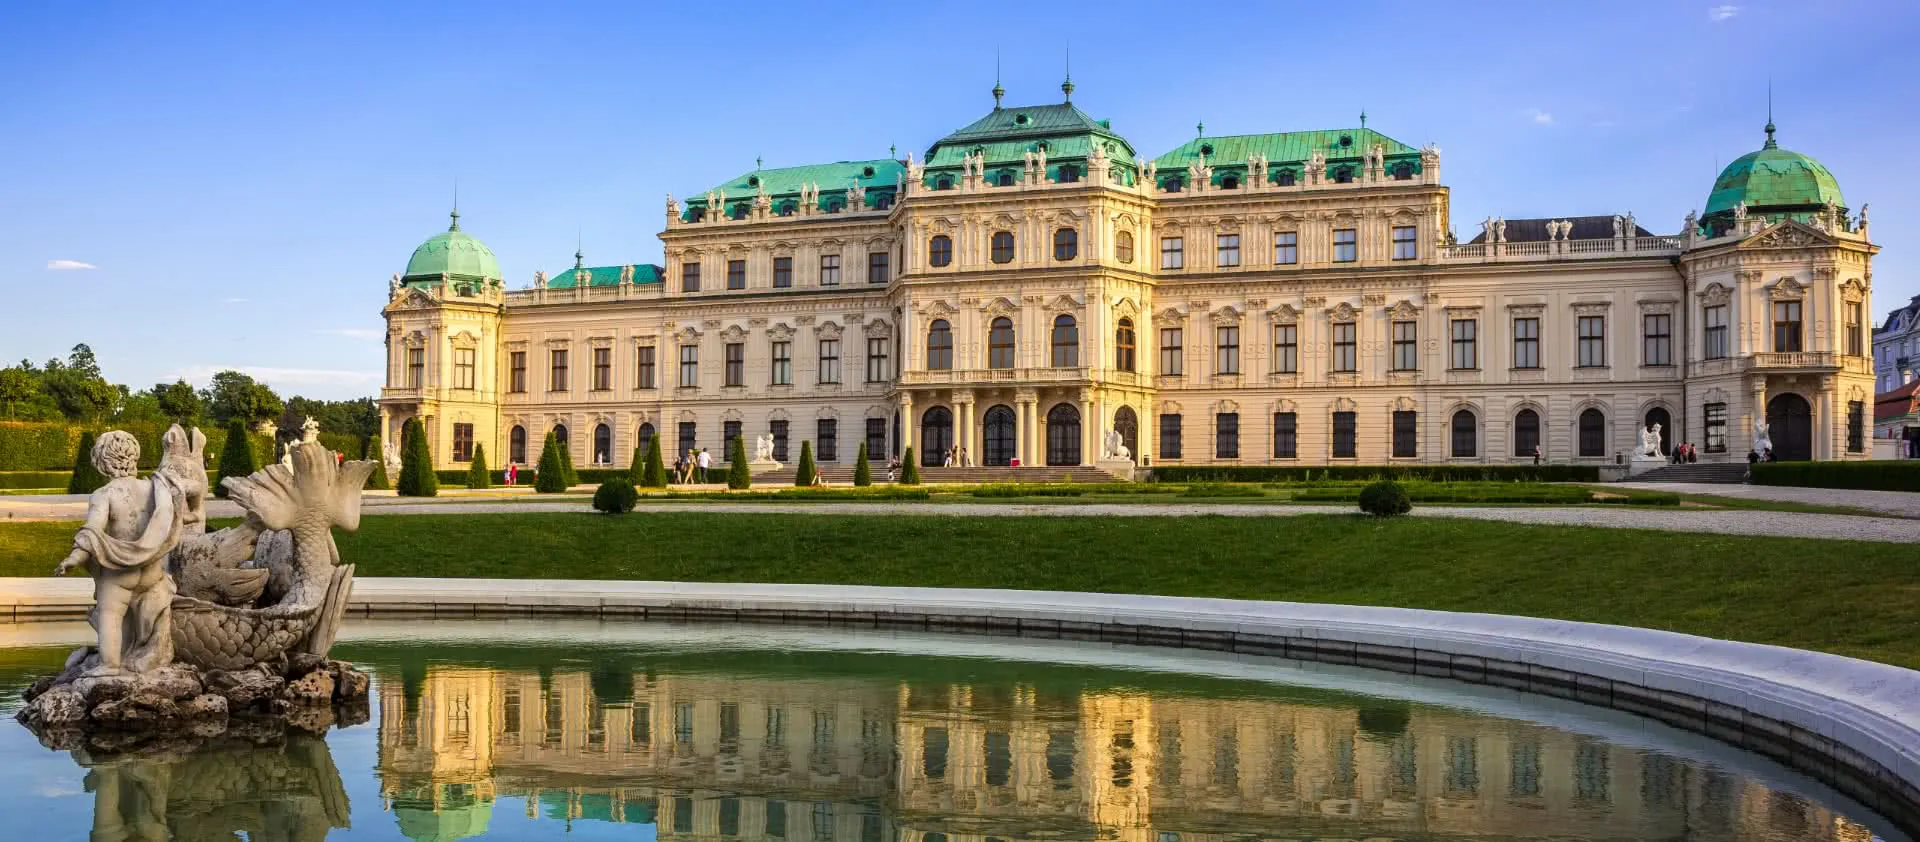 Vienna - the destination for business travel